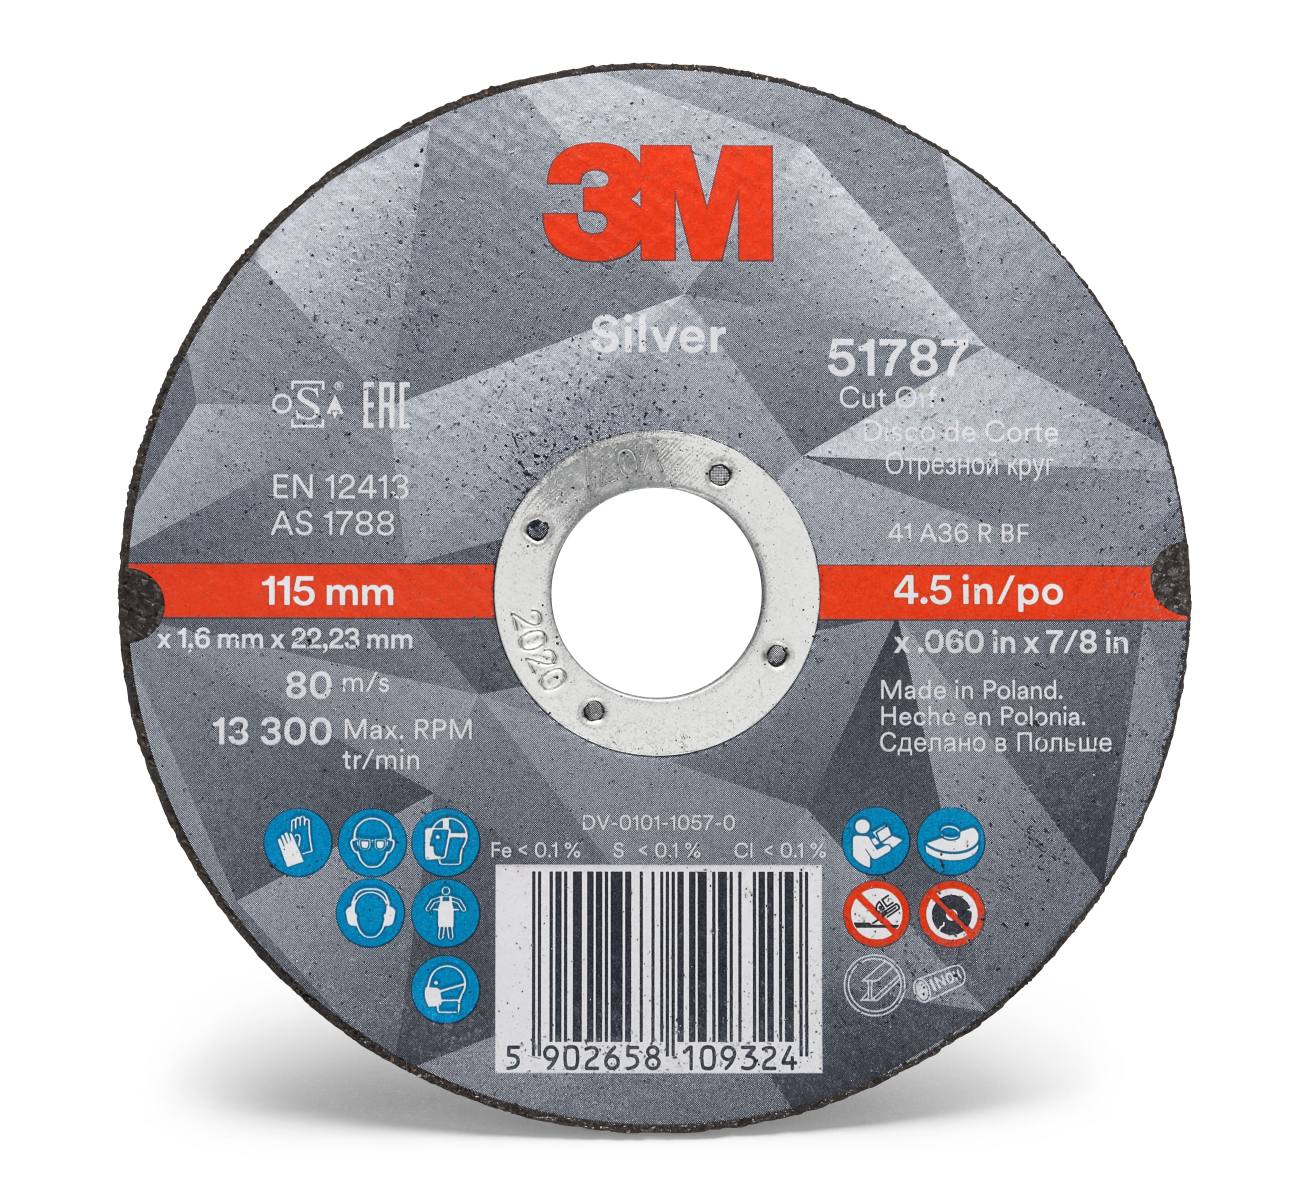 Disco de corte 3M Silver Cut-Off, 100 mm, 1,0 mm, 16 mm, T41, 51775